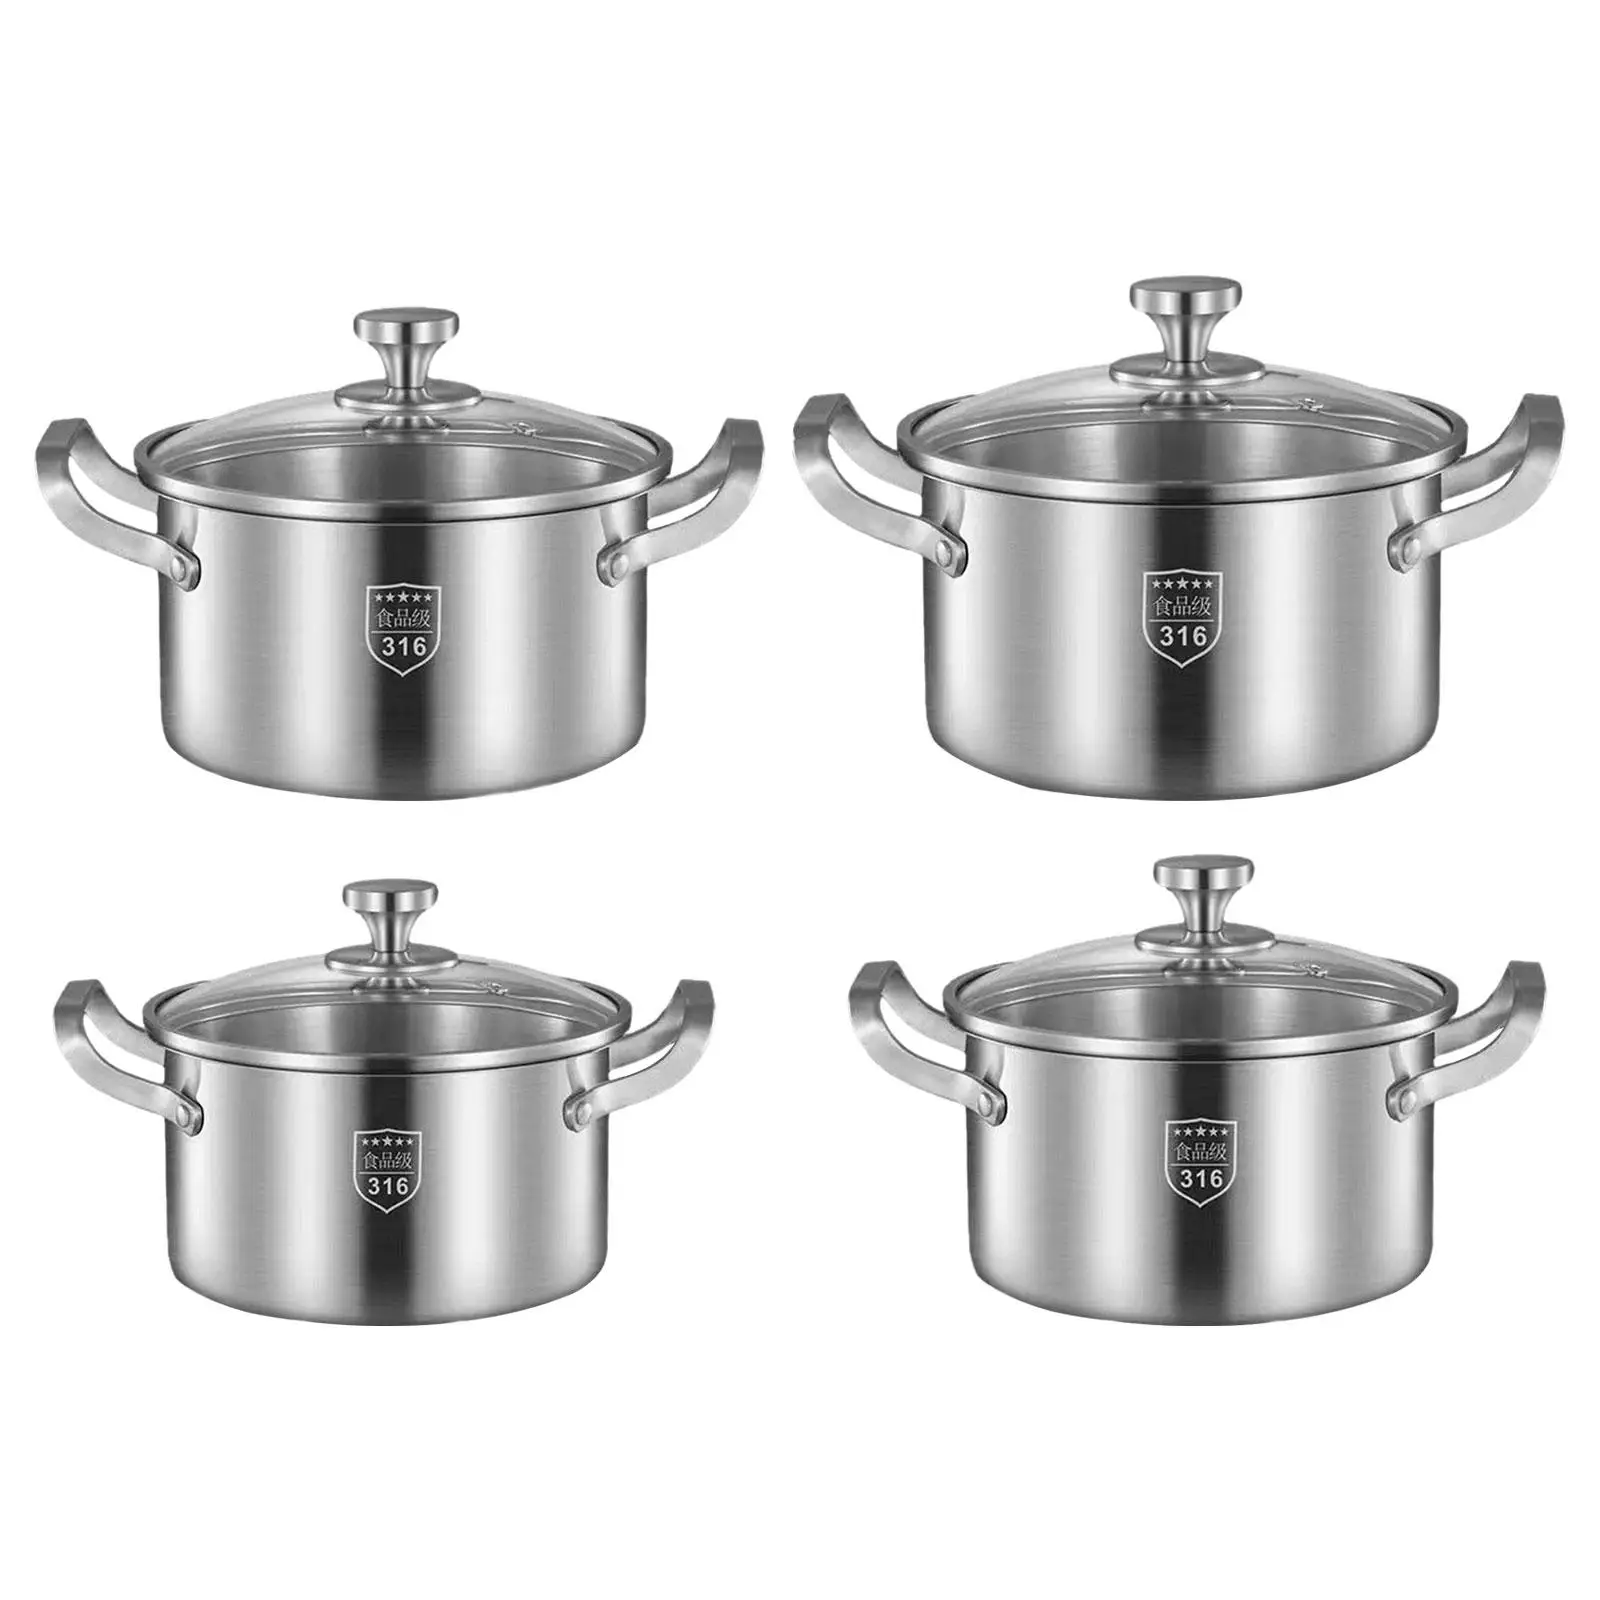 Soup Pot Cookware Ergonomic Handle Saucepan Frying Pan Cooking Pot Stockpot Stainless Steel for Restaurant Bar Kitchen Cafe